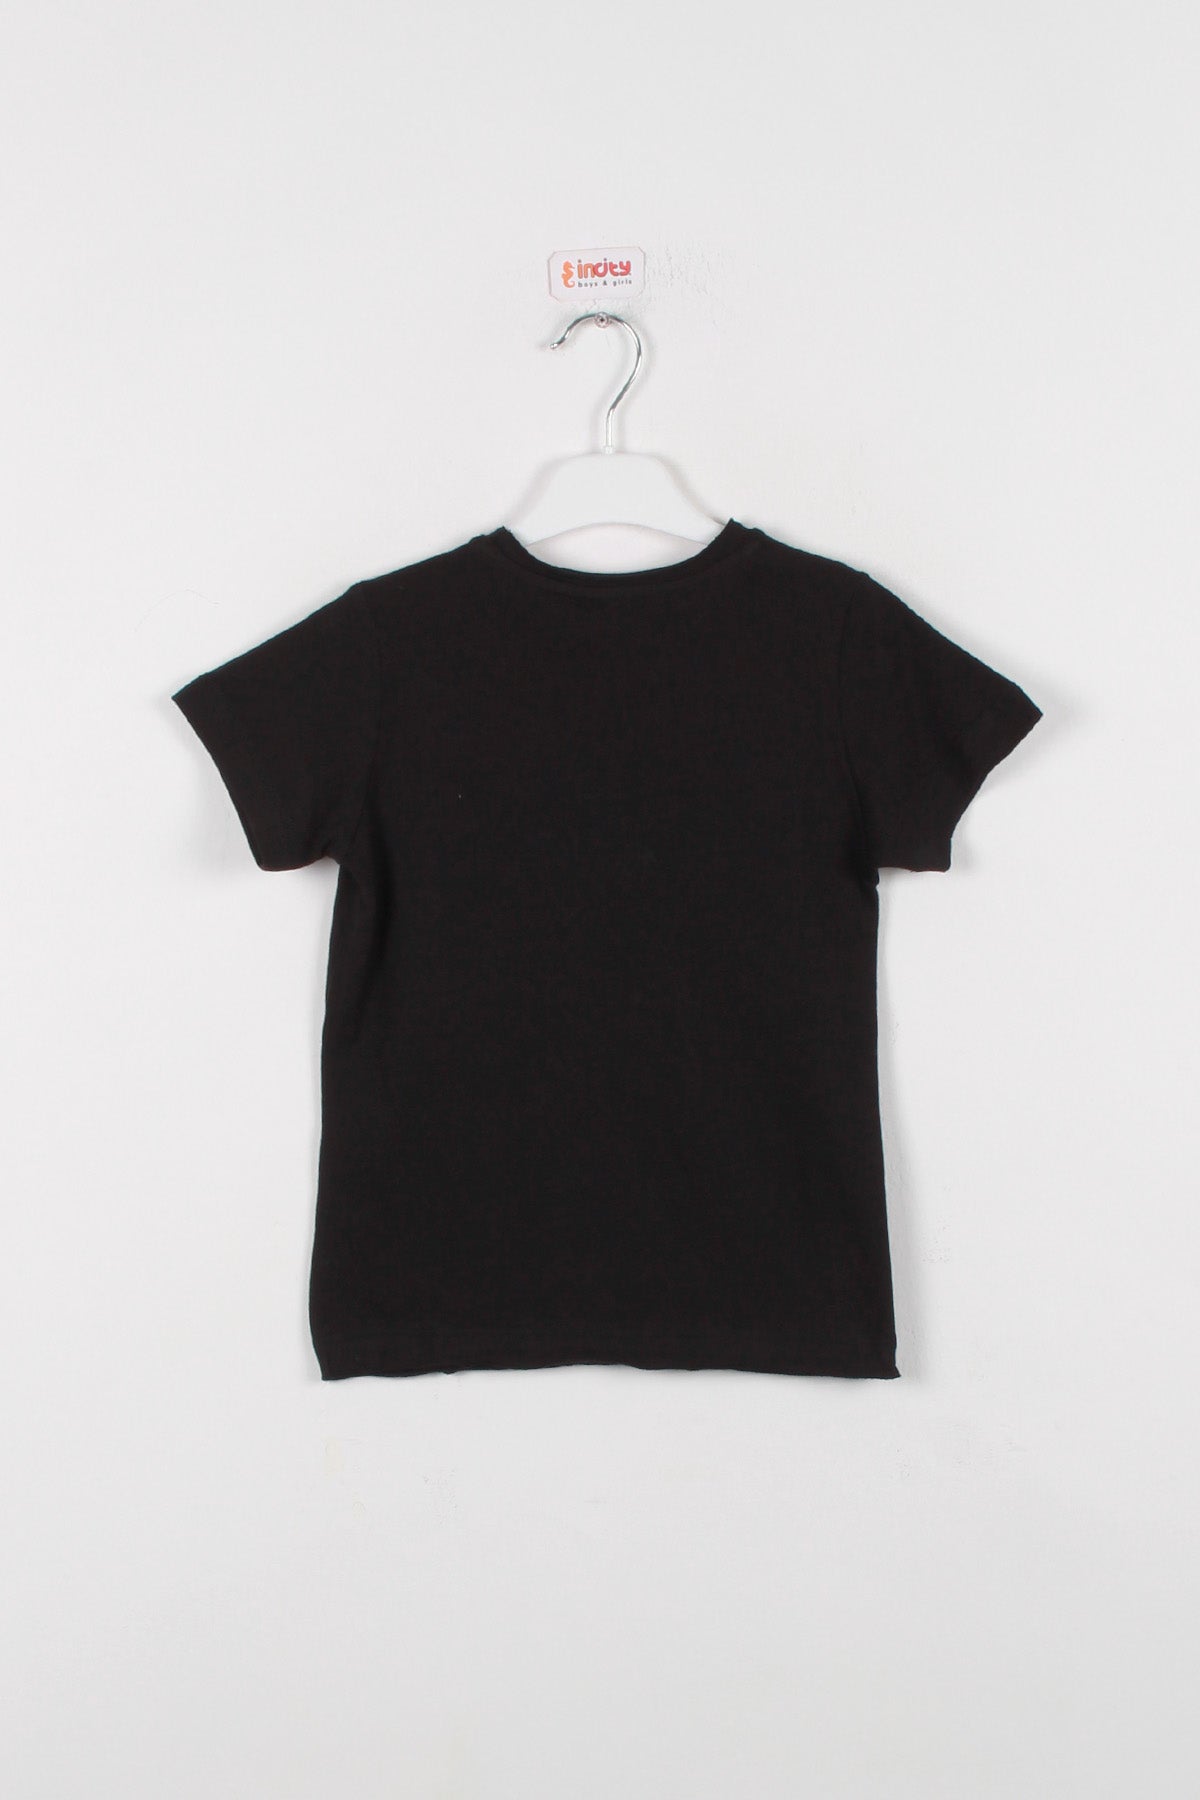 Sleeve Boys T-Shirt Solid Plain InCity Short Kids Basic Neck Round